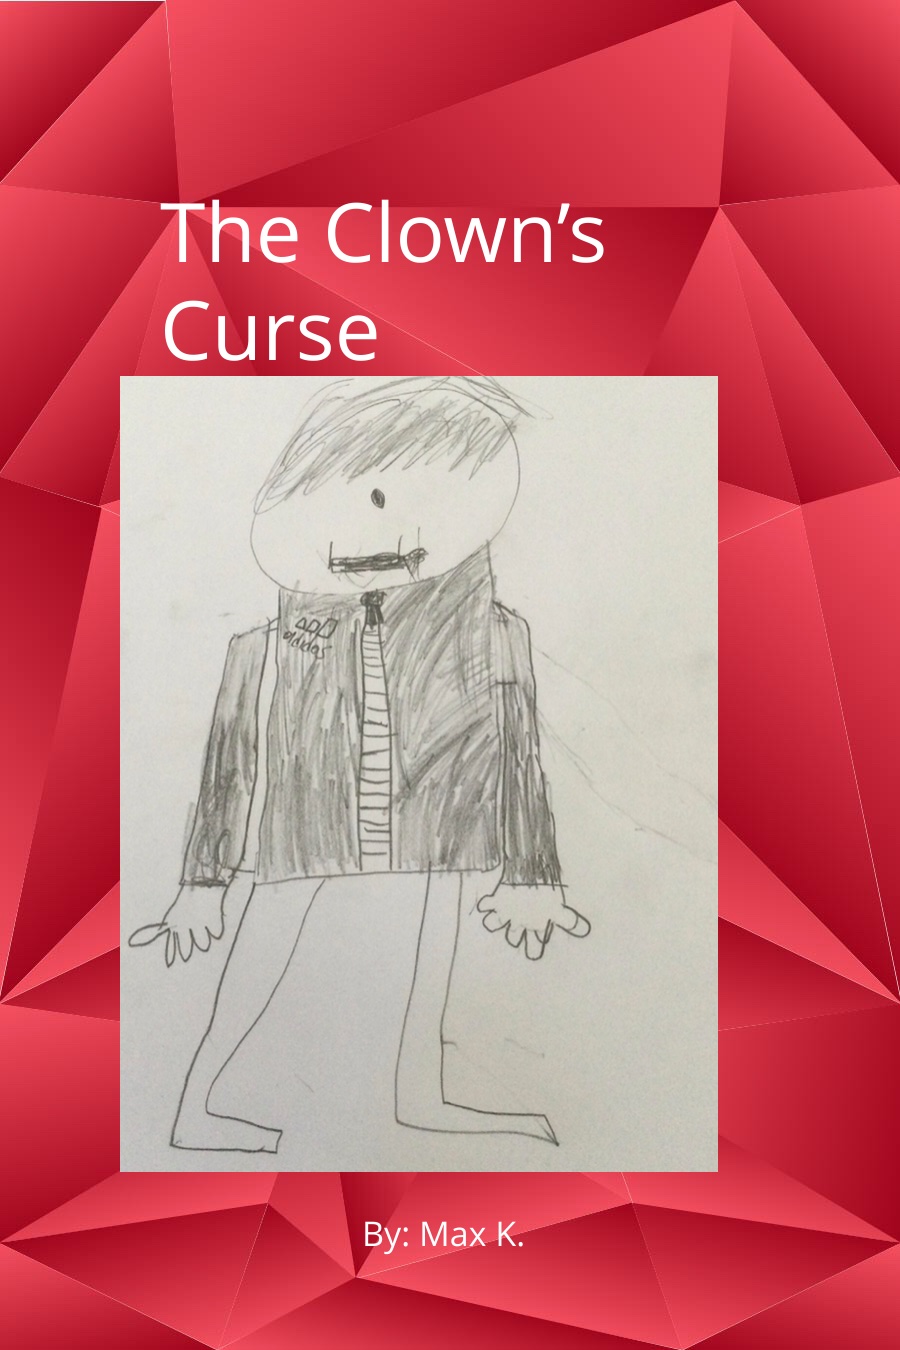 The Clown’s Curse by Max K